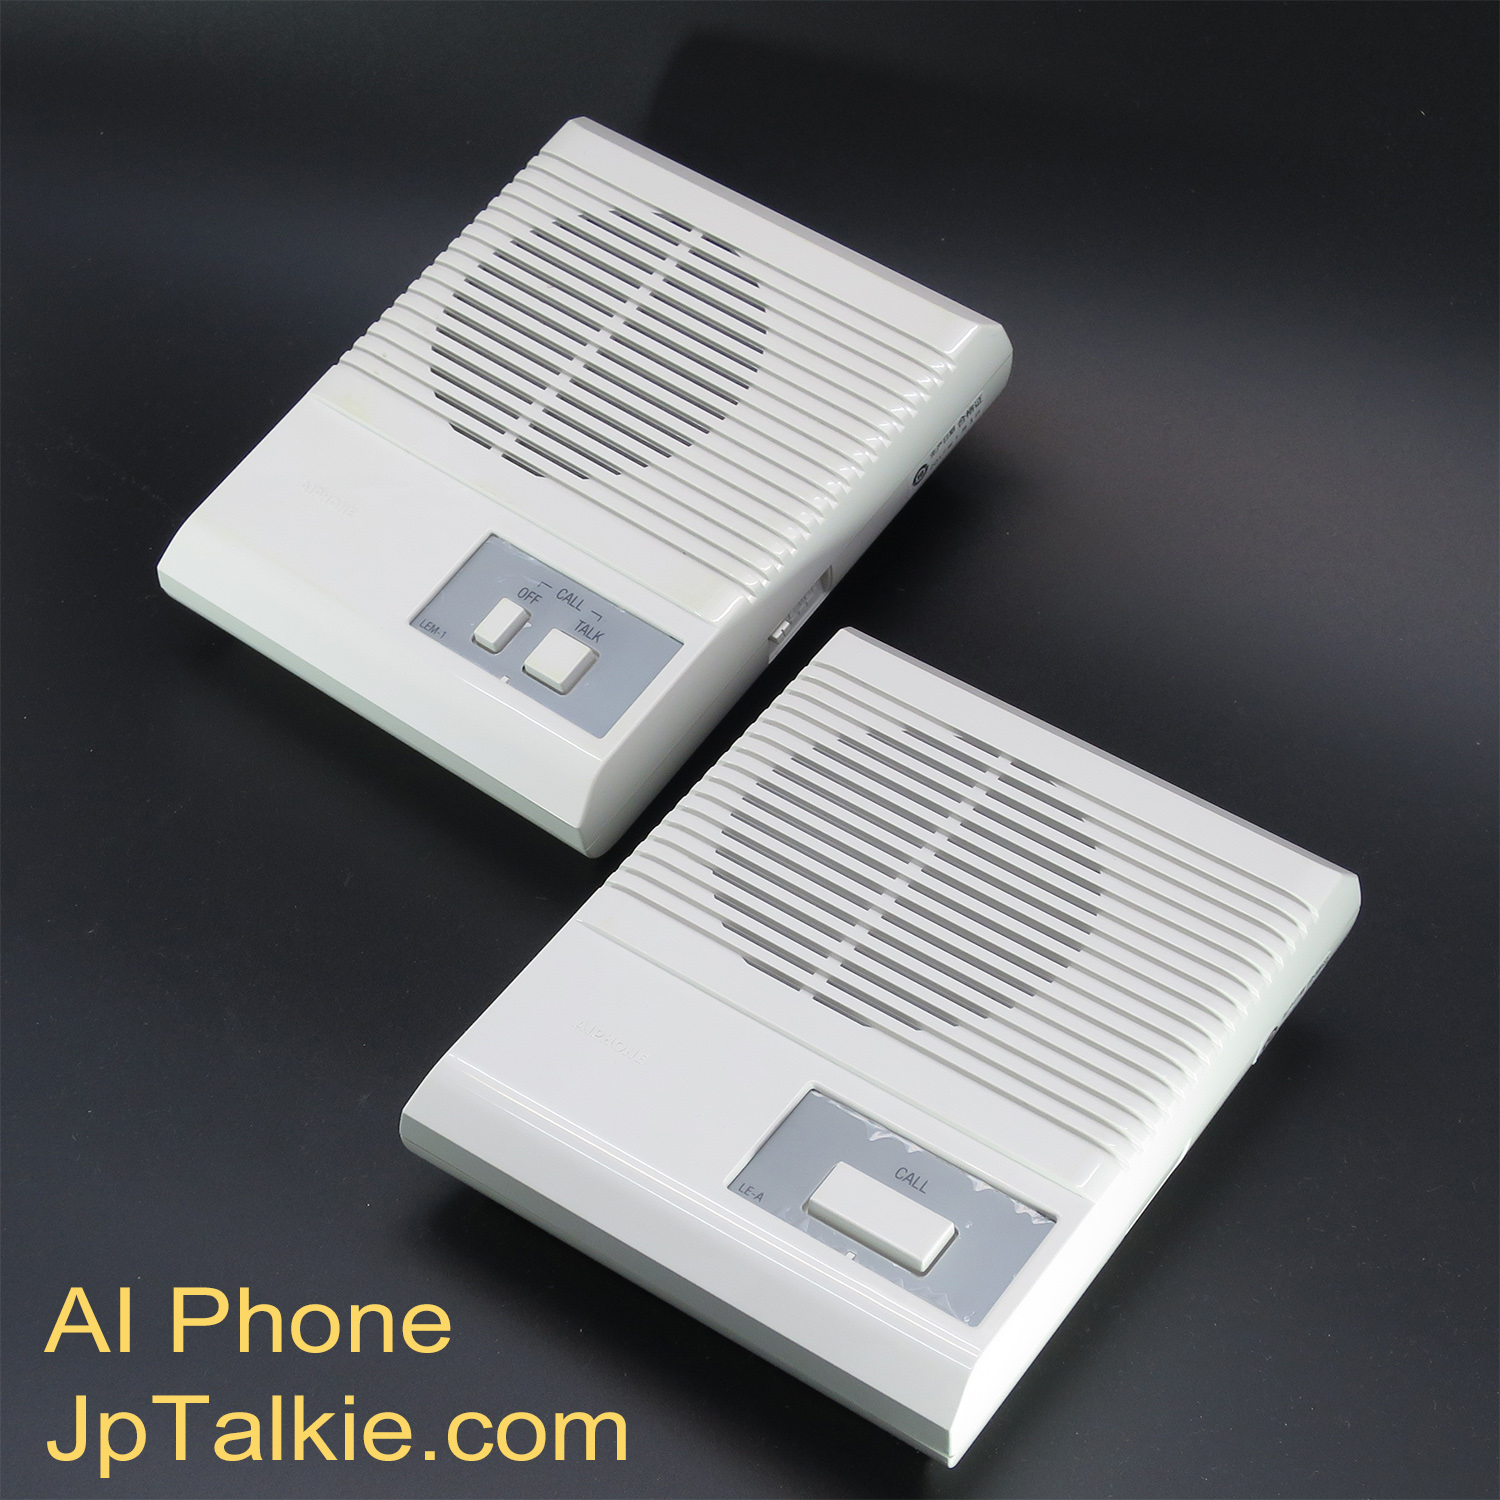 AIPHONE LEM-1 窗口/門口雙向對講機,客服櫃檯對講系統, 音質清晰無雜訊 安裝簡便操作容易 有線對講機 前面音量控制 單獨計